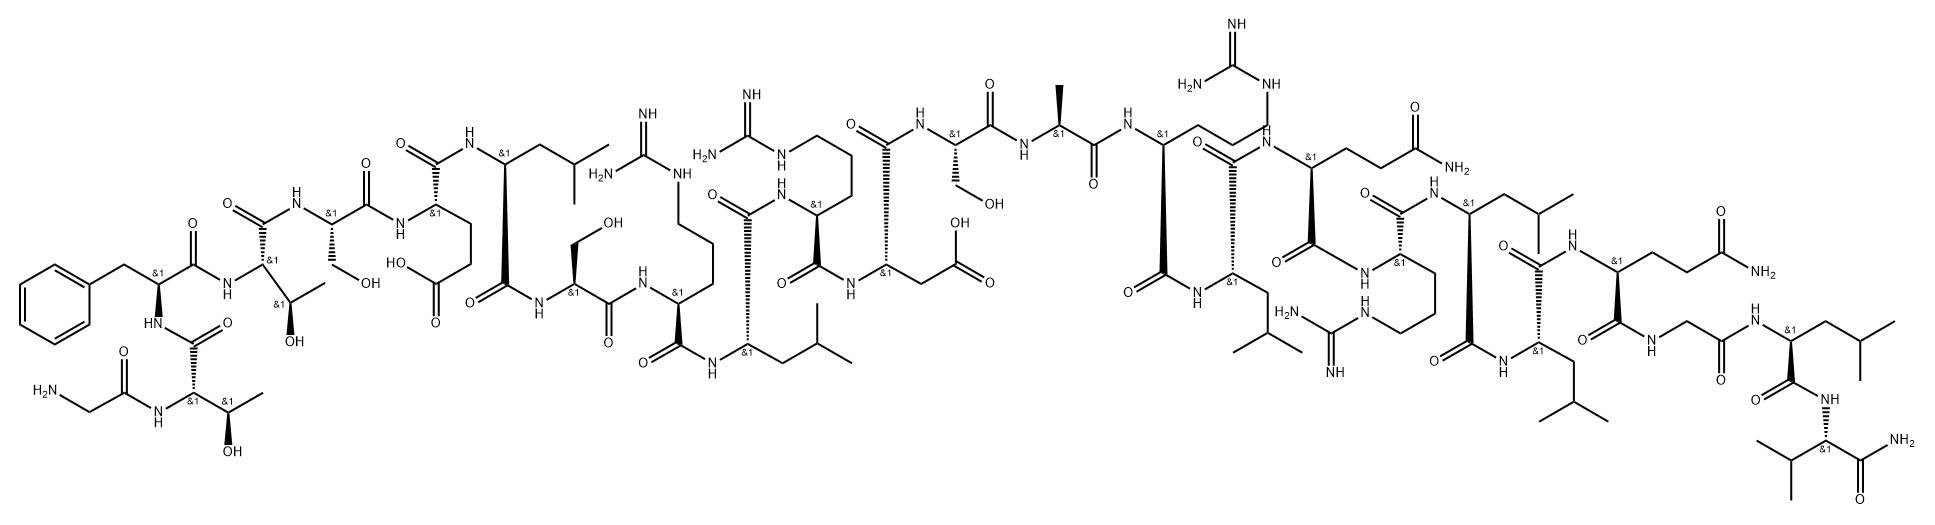 secretin (4-27) Structure